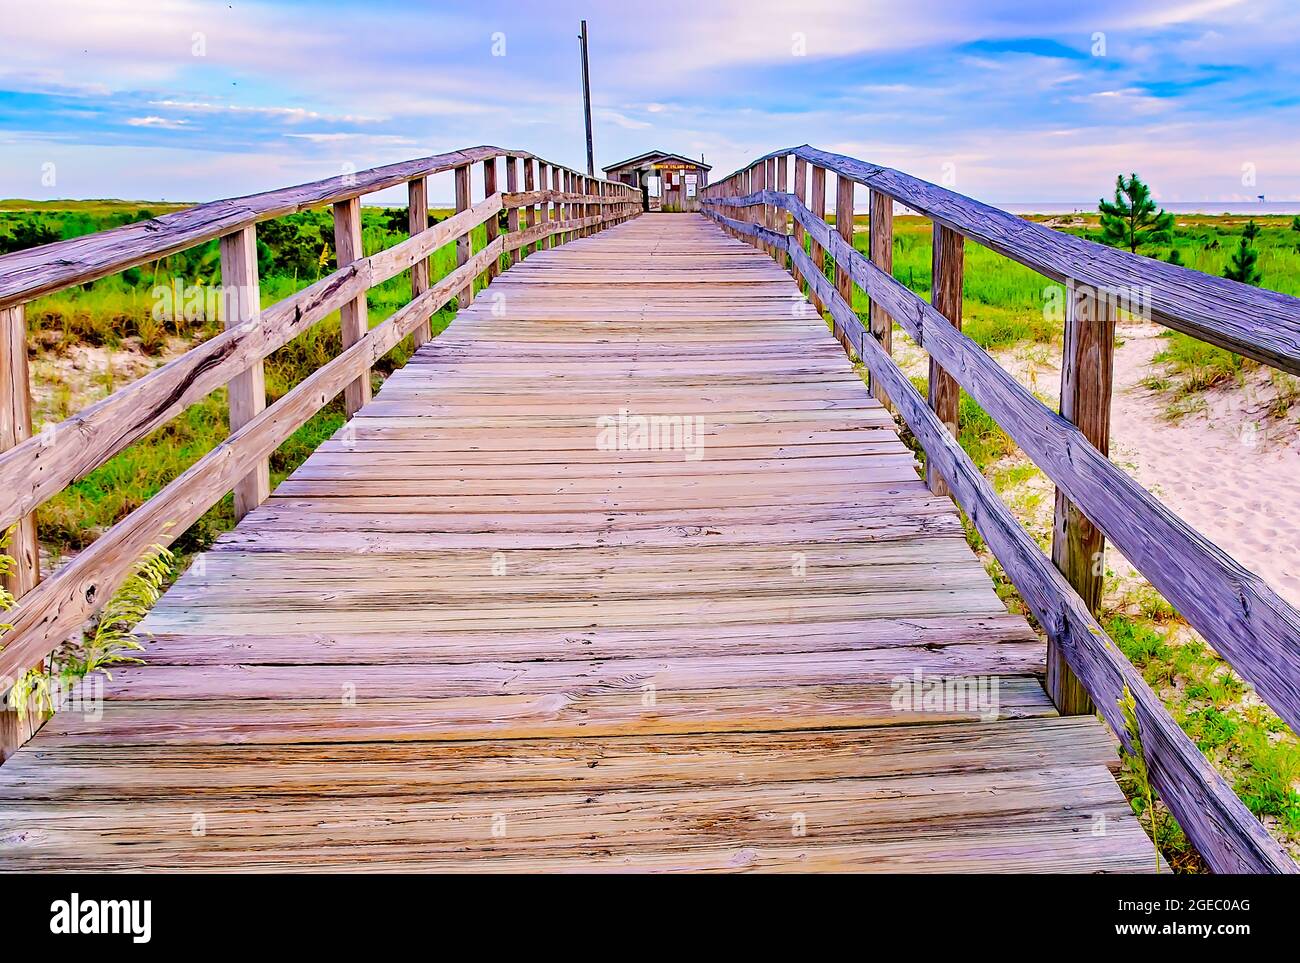 The Dauphin Island Public Beach pier is pictured, Aug. 12, 2021, in Dauphin Island, Alabama. Stock Photo